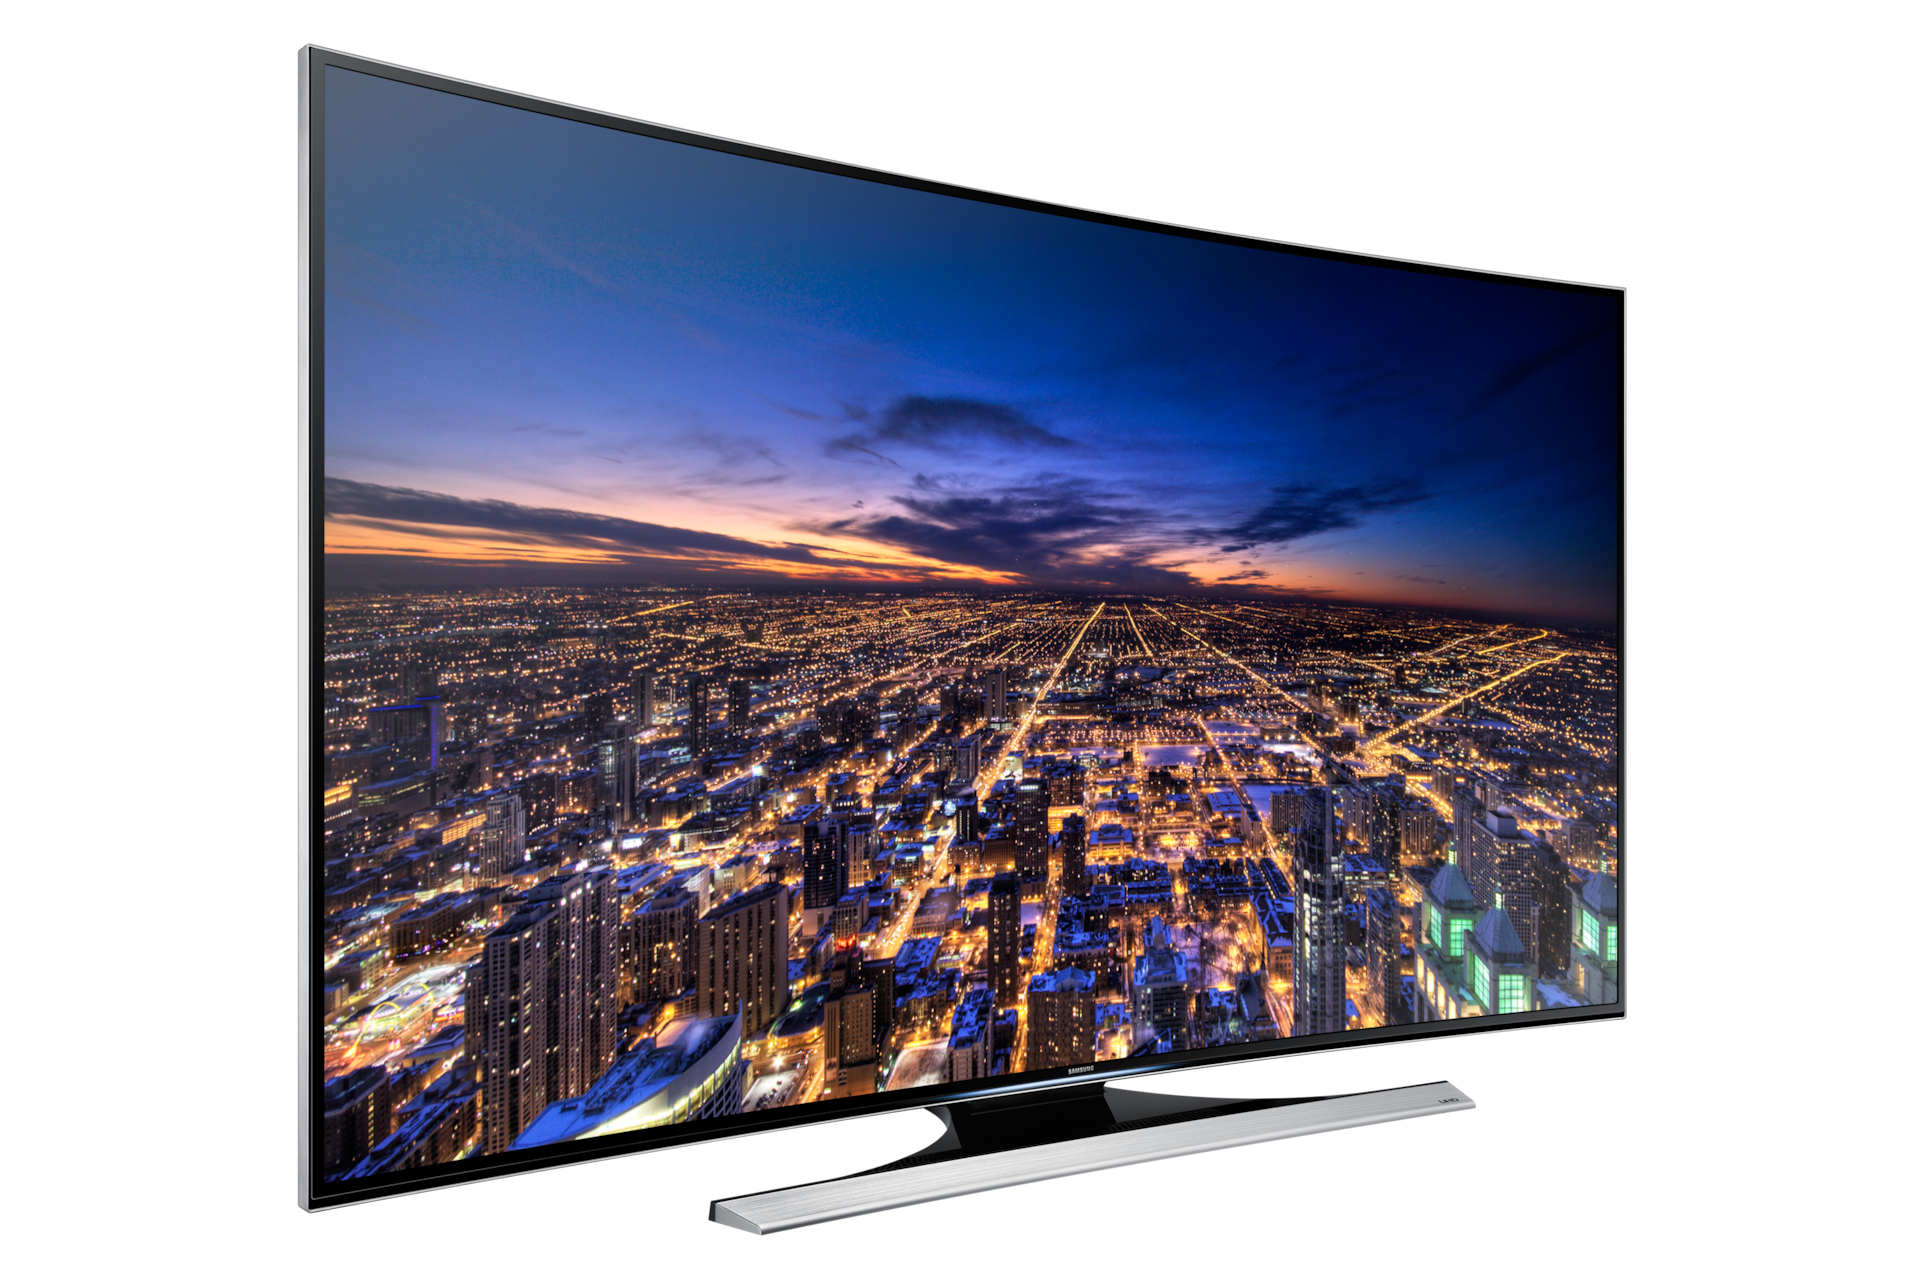 65-inch HU8200 Series 8 Curved Smart 3D UHD 4K LED TV - Samsung Ireland